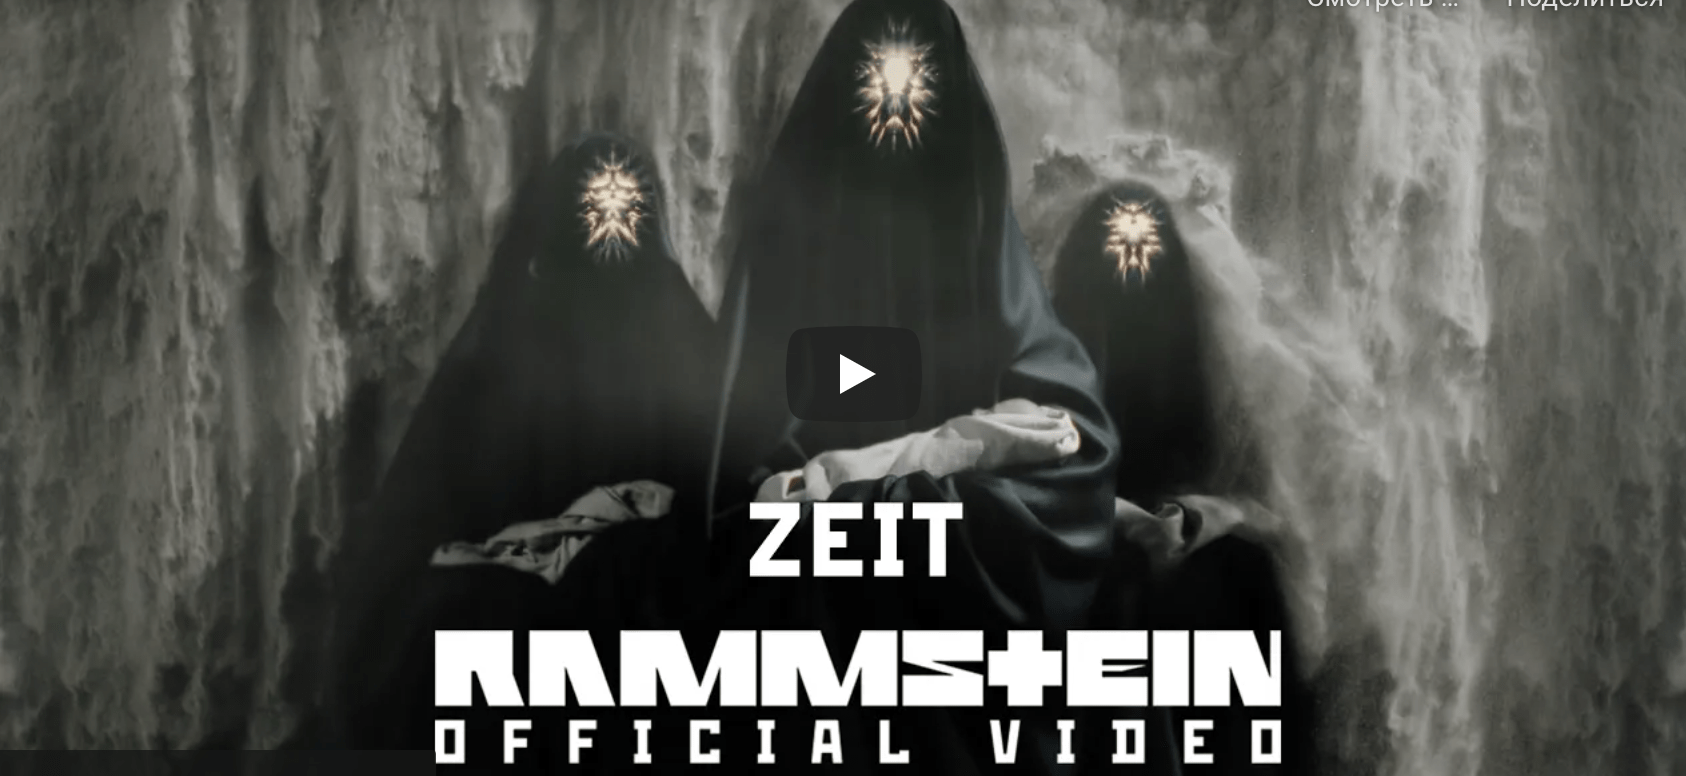 ZEIT новый клип группы Rammstein